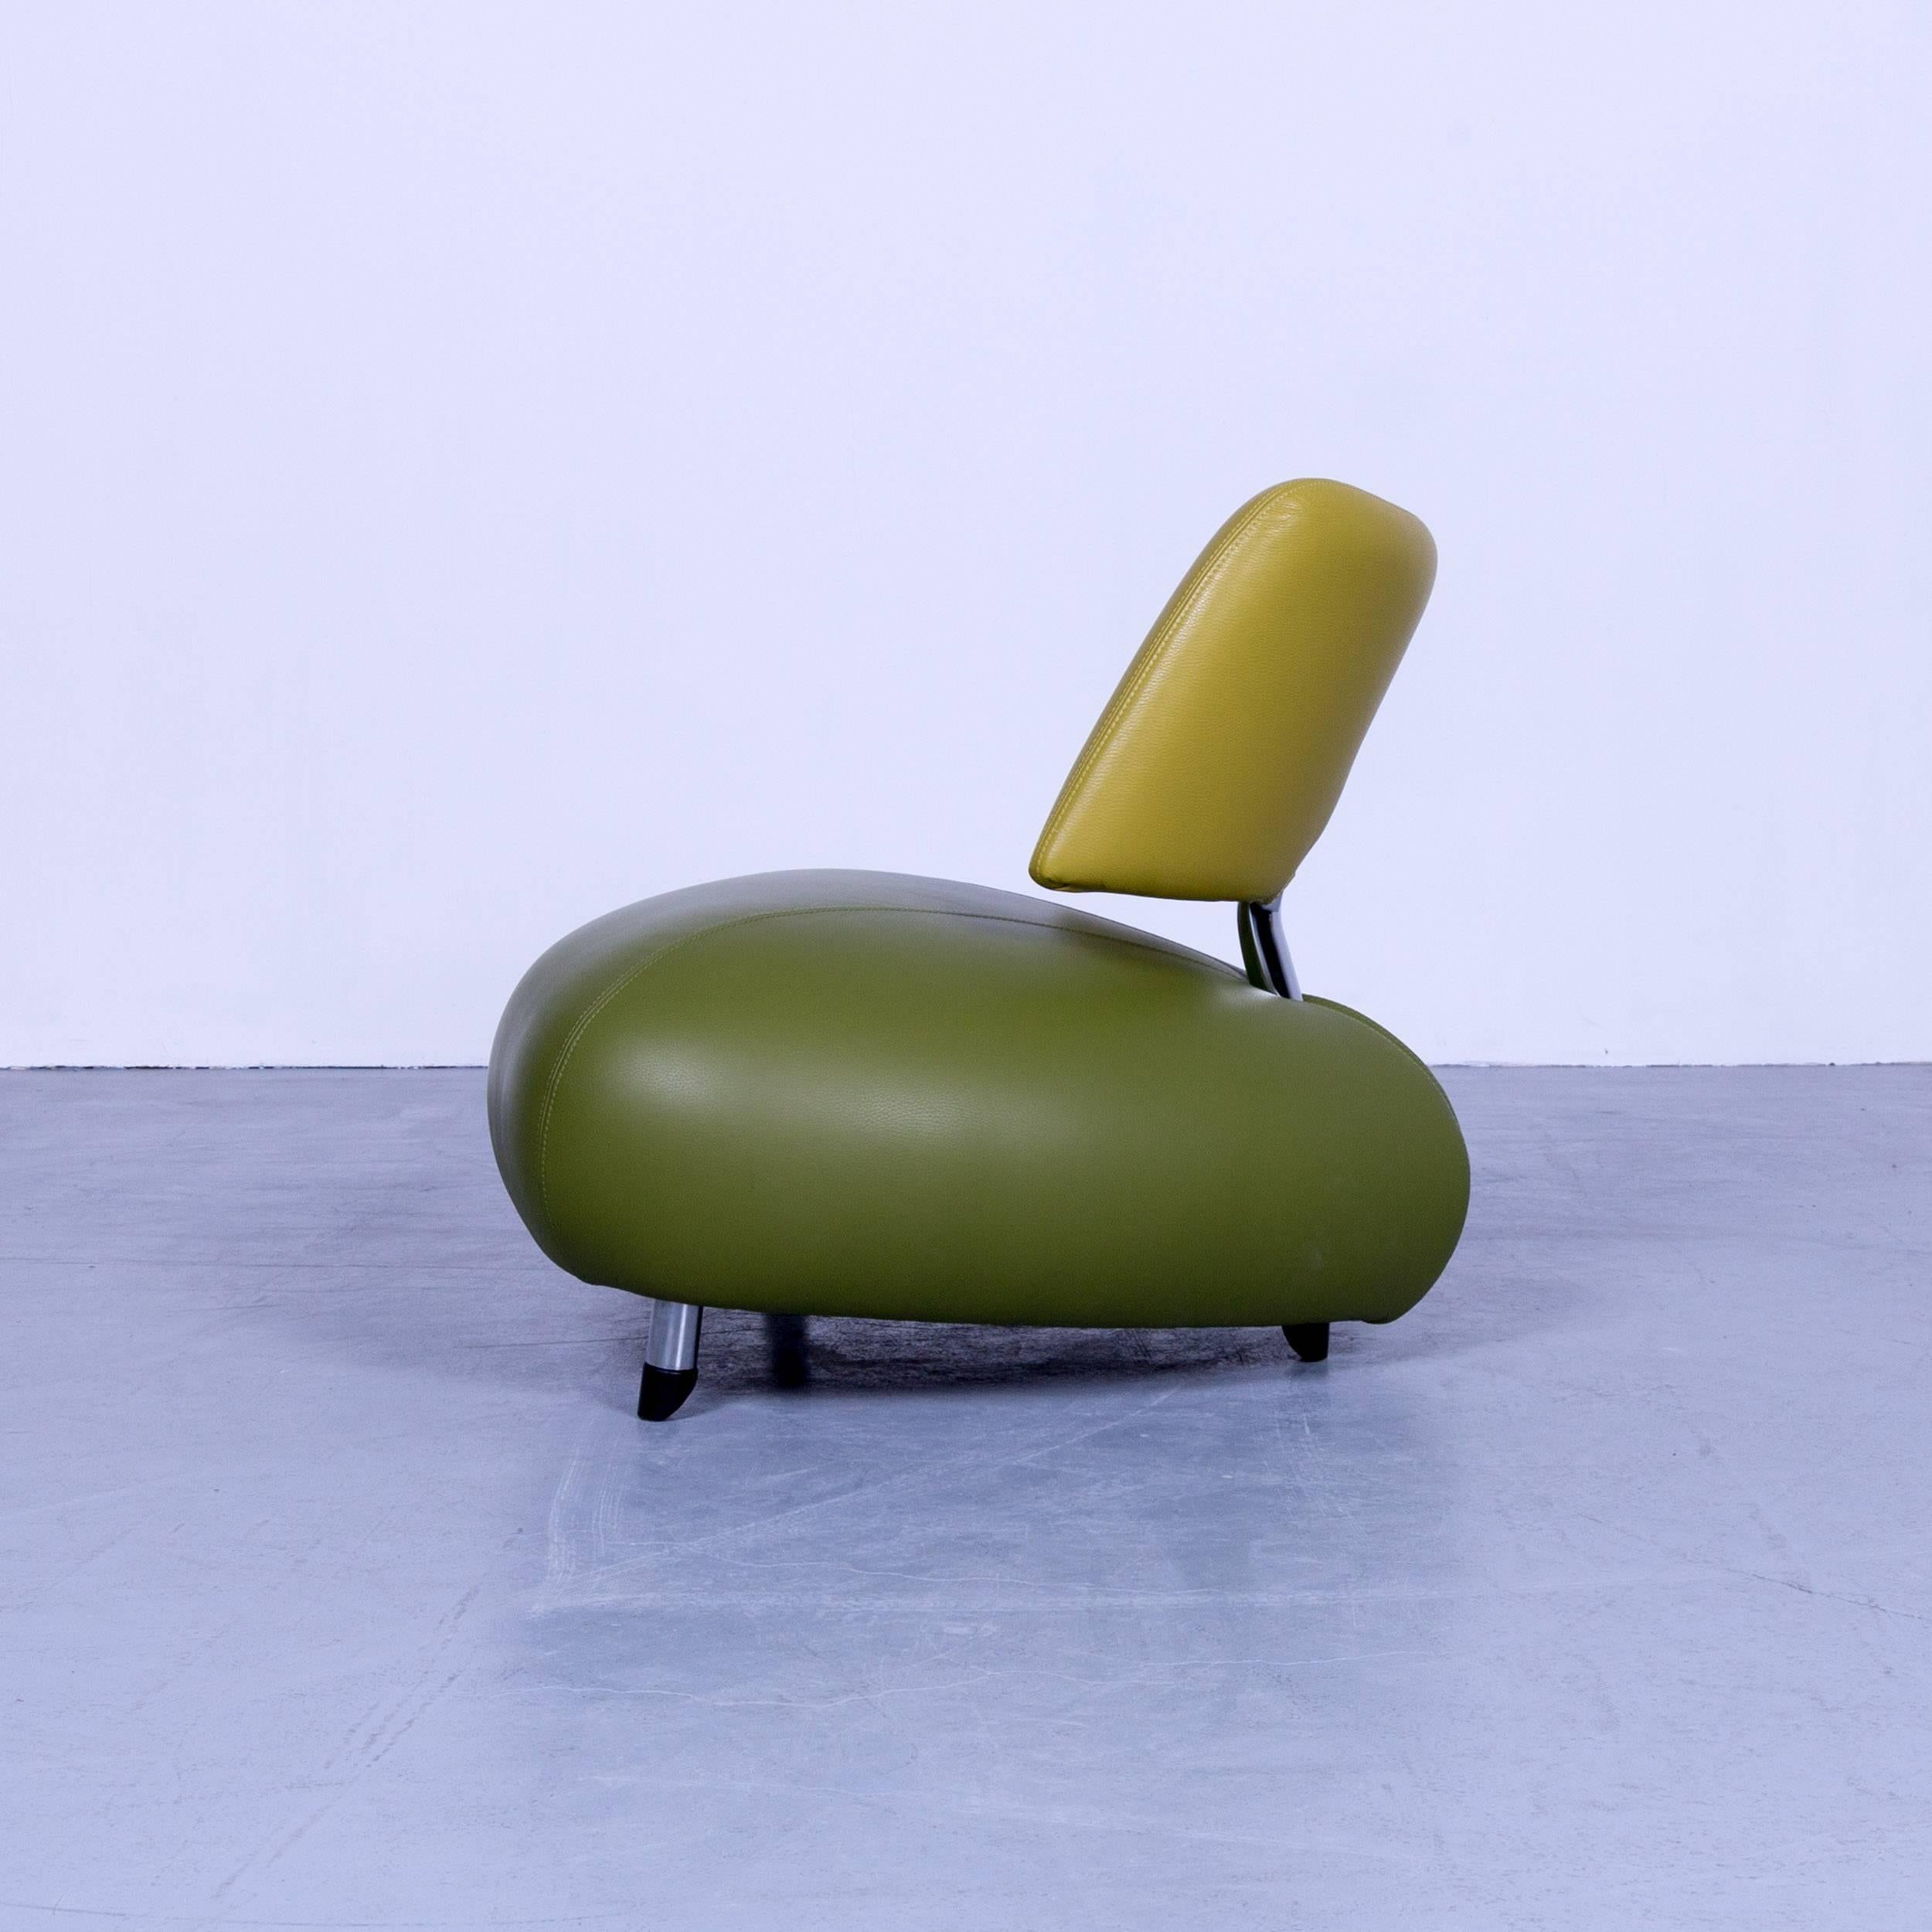 Leolux Pallone Pa Designer Chair Green One Seat Modern by Roy De Scheemaker 1989 For Sale 1